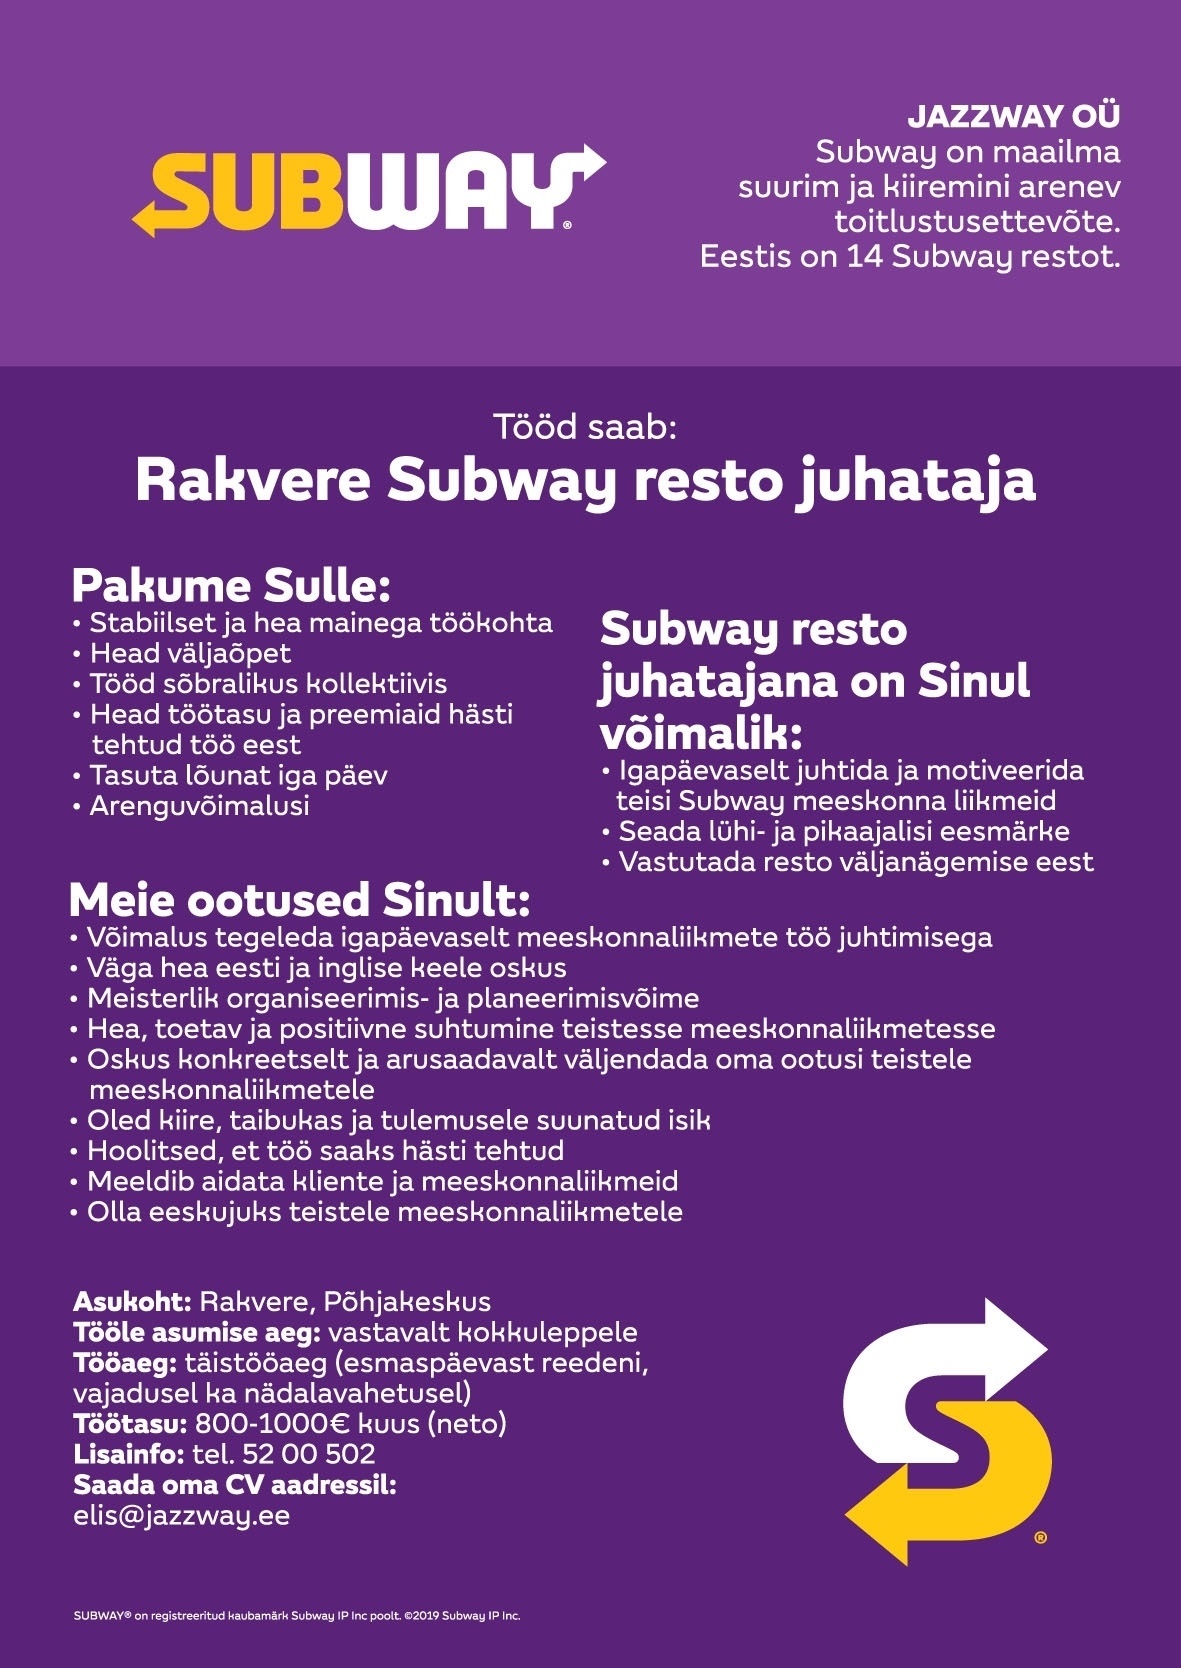 Jazzway OÜ Rakvere Subway resto juhataja